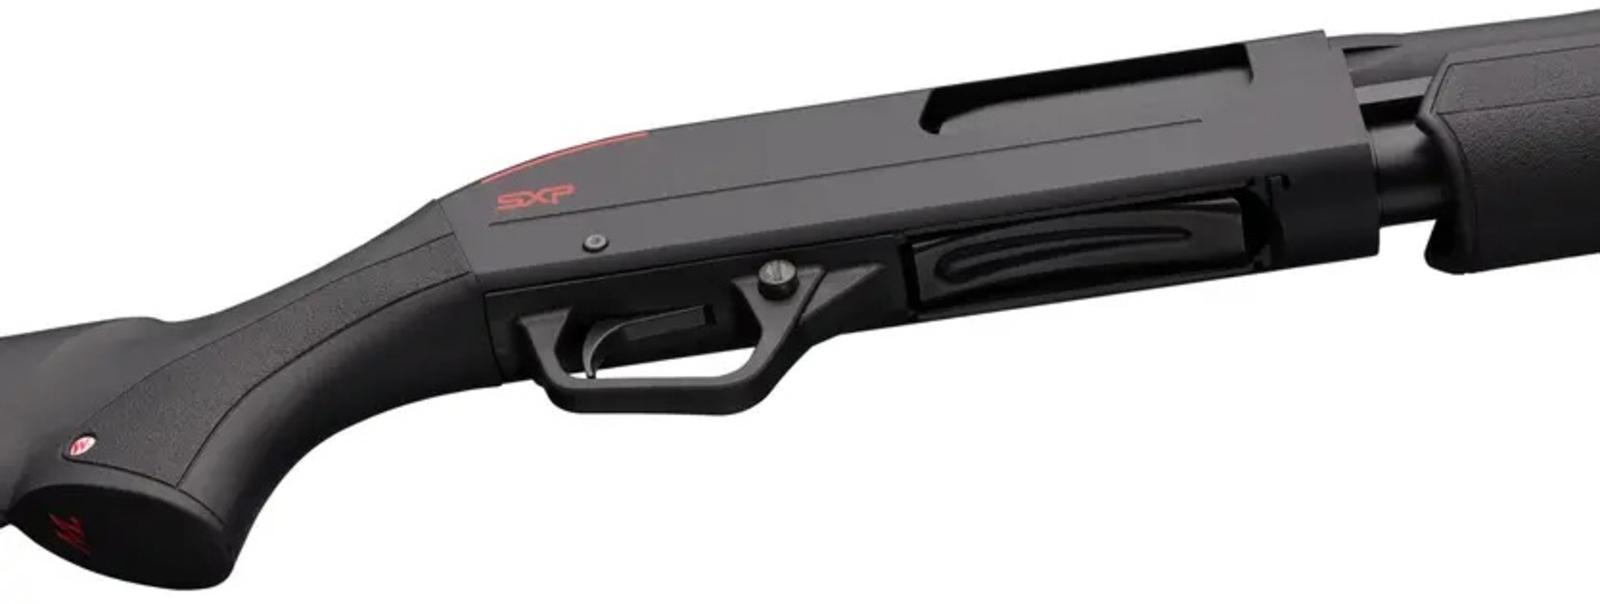 Winchester SXP Black Shadow 12 Gauge Shotgun